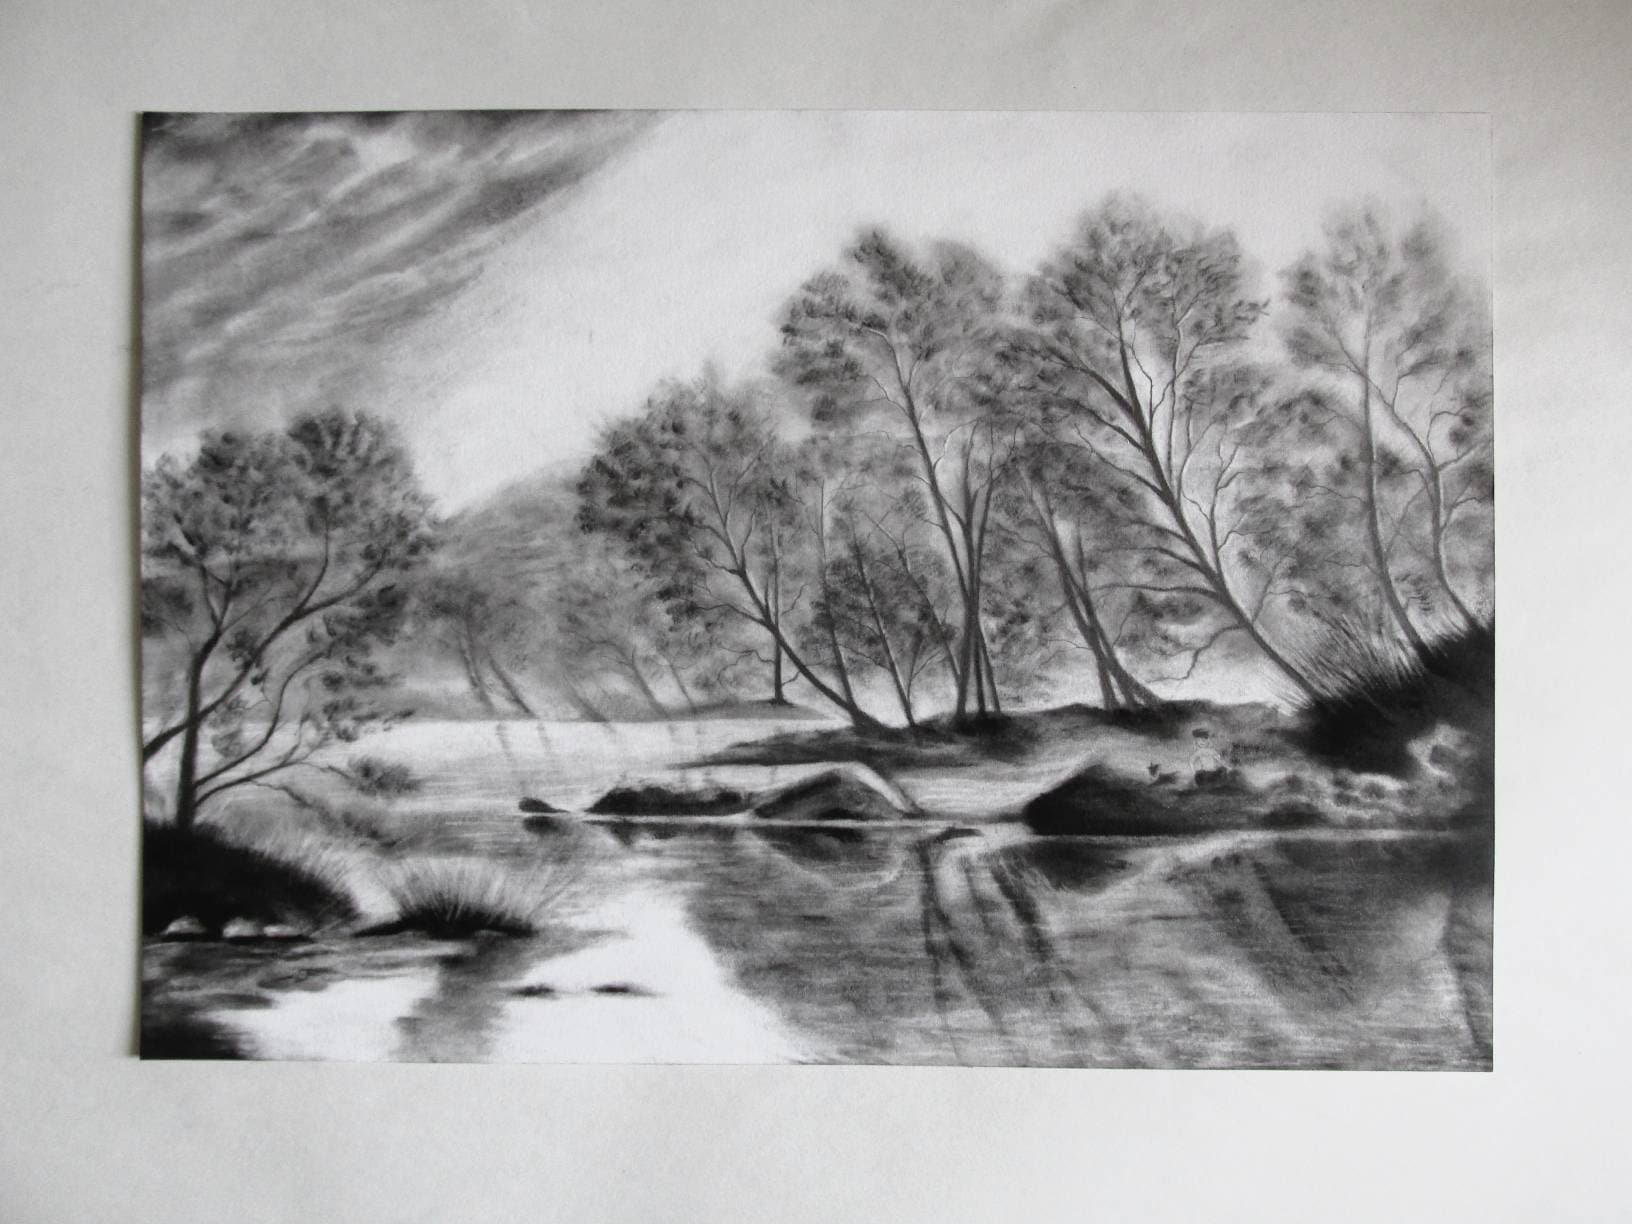  1-11x14 Through the Fog - Charcoal Drawing - Original